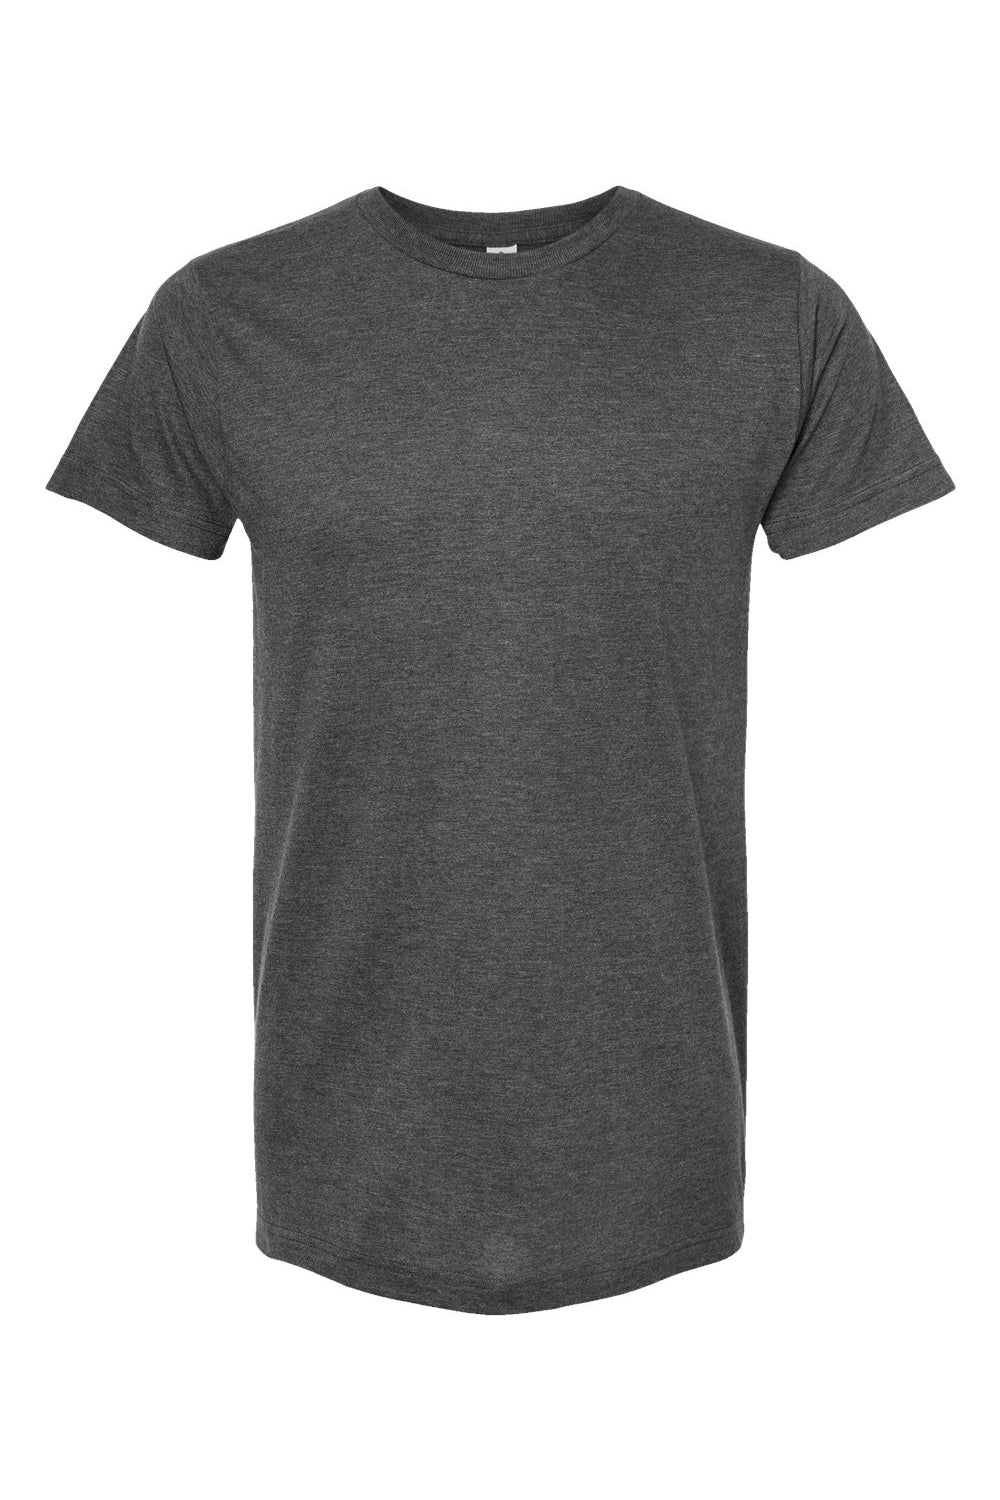 Tultex 202 Mens Fine Jersey Short Sleeve Crewneck T-Shirt Heather Charcoal Grey Flat Front